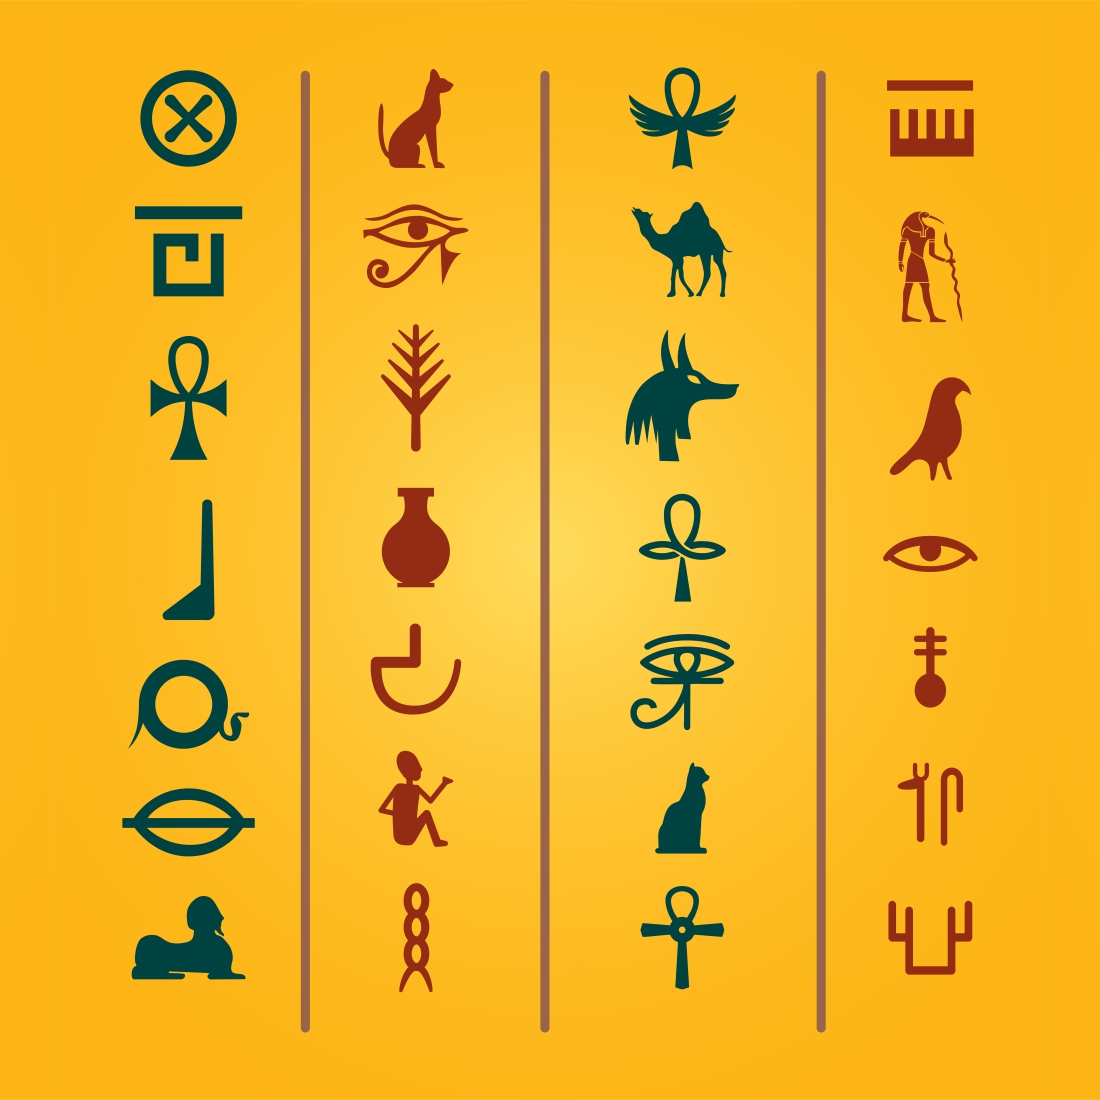 Egyptian hieroglyphics flat design cover image.